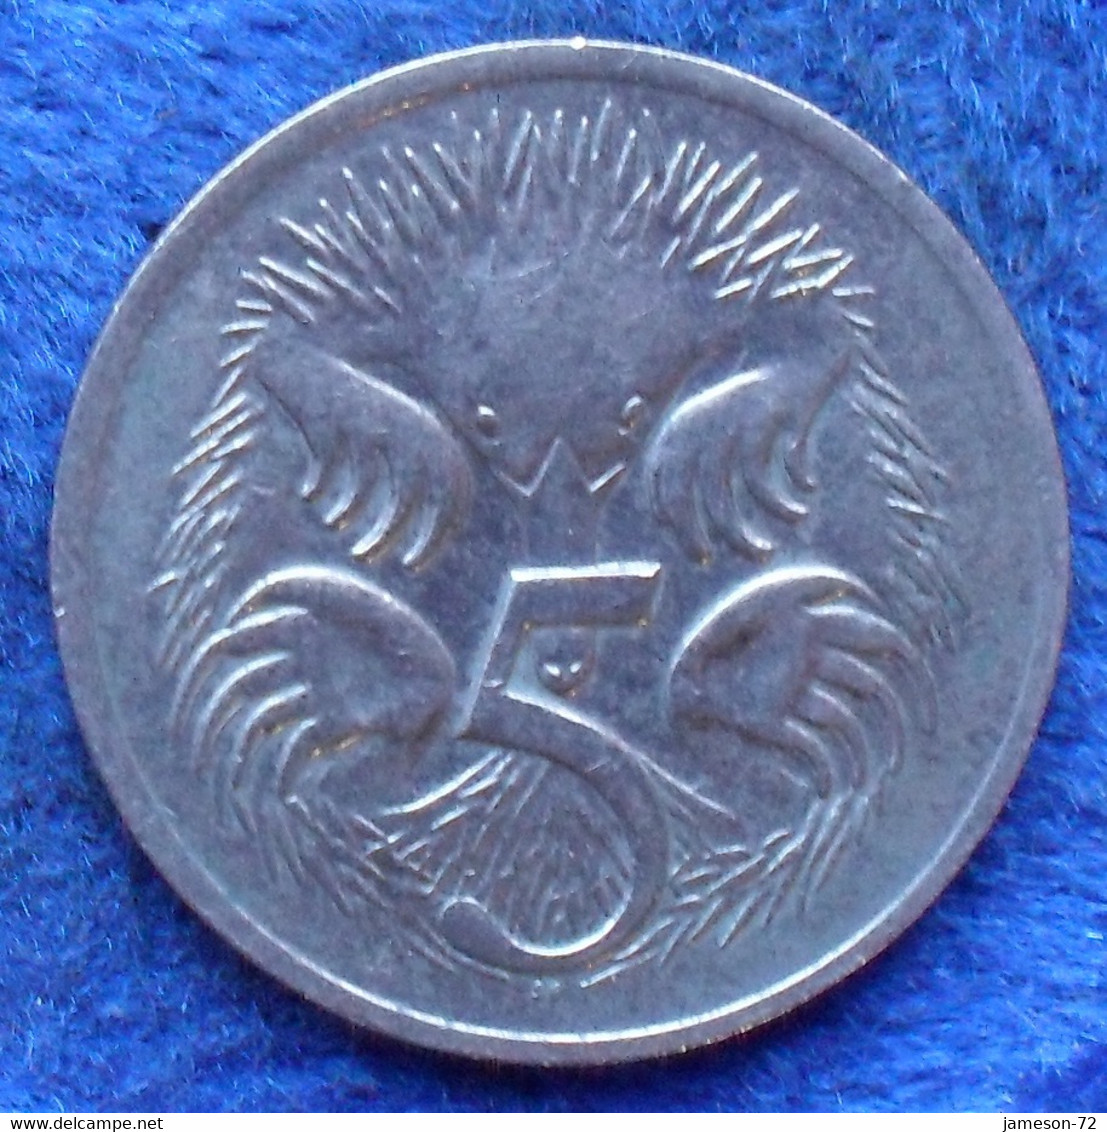 AUSTRALIA - 5 Cents 1977 "echidna" KM#64 Elizabeth II Decimal - Edelweiss Coins - Unclassified